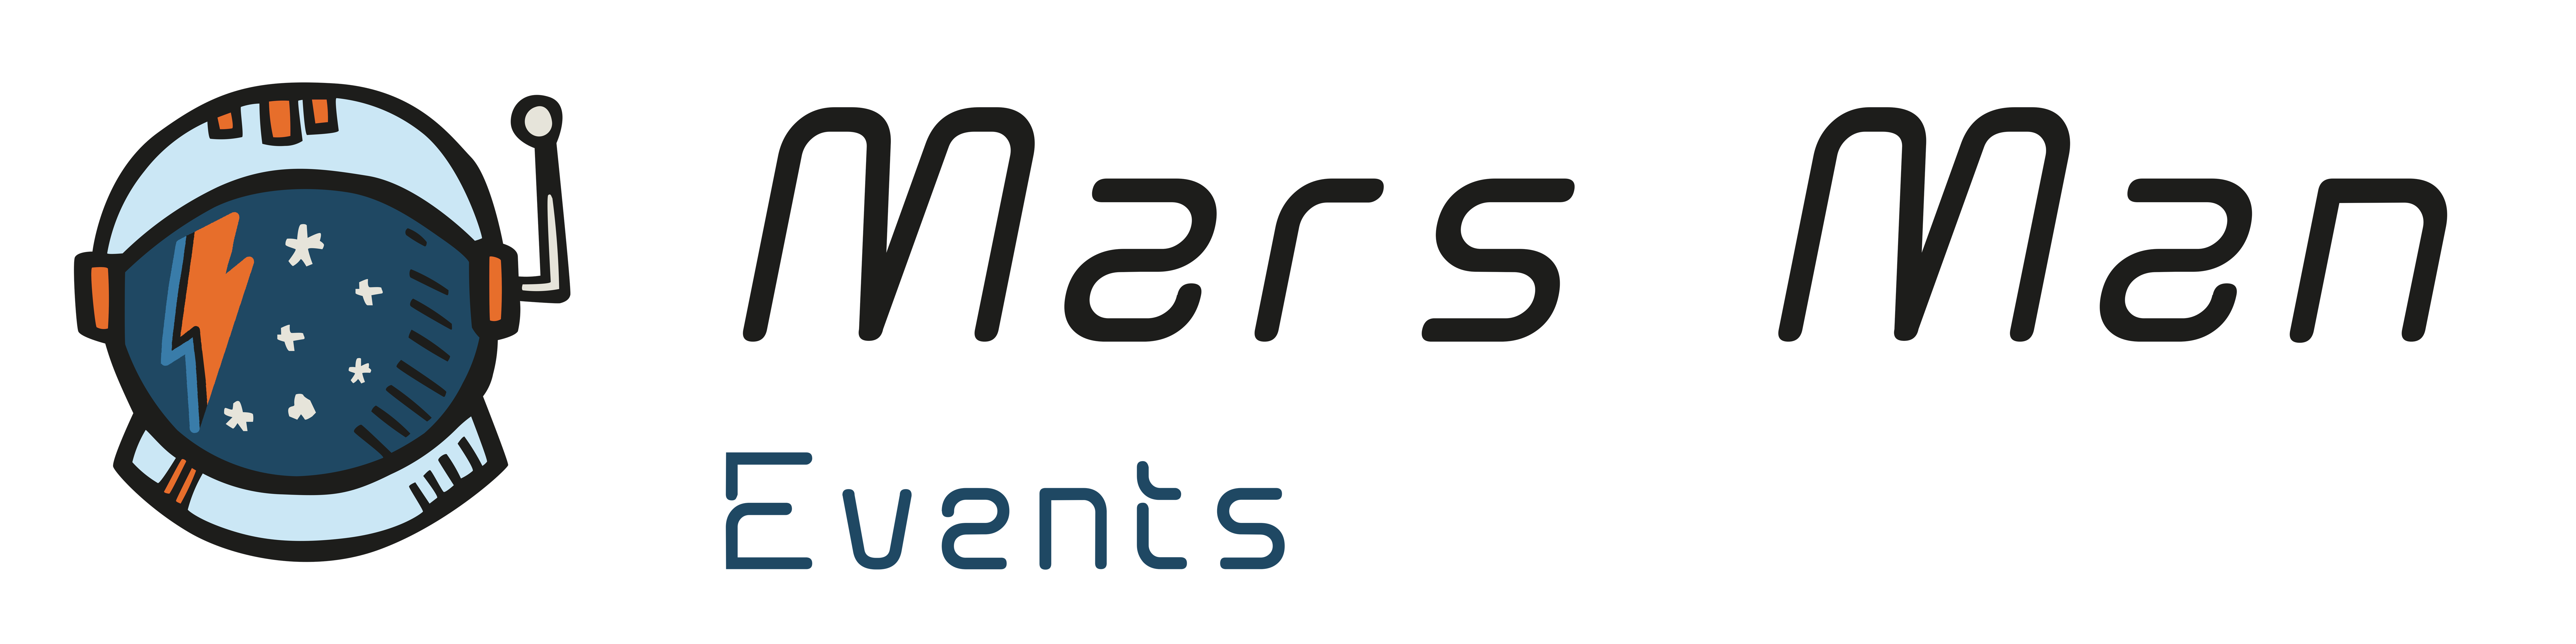 Mars Man Events Logo